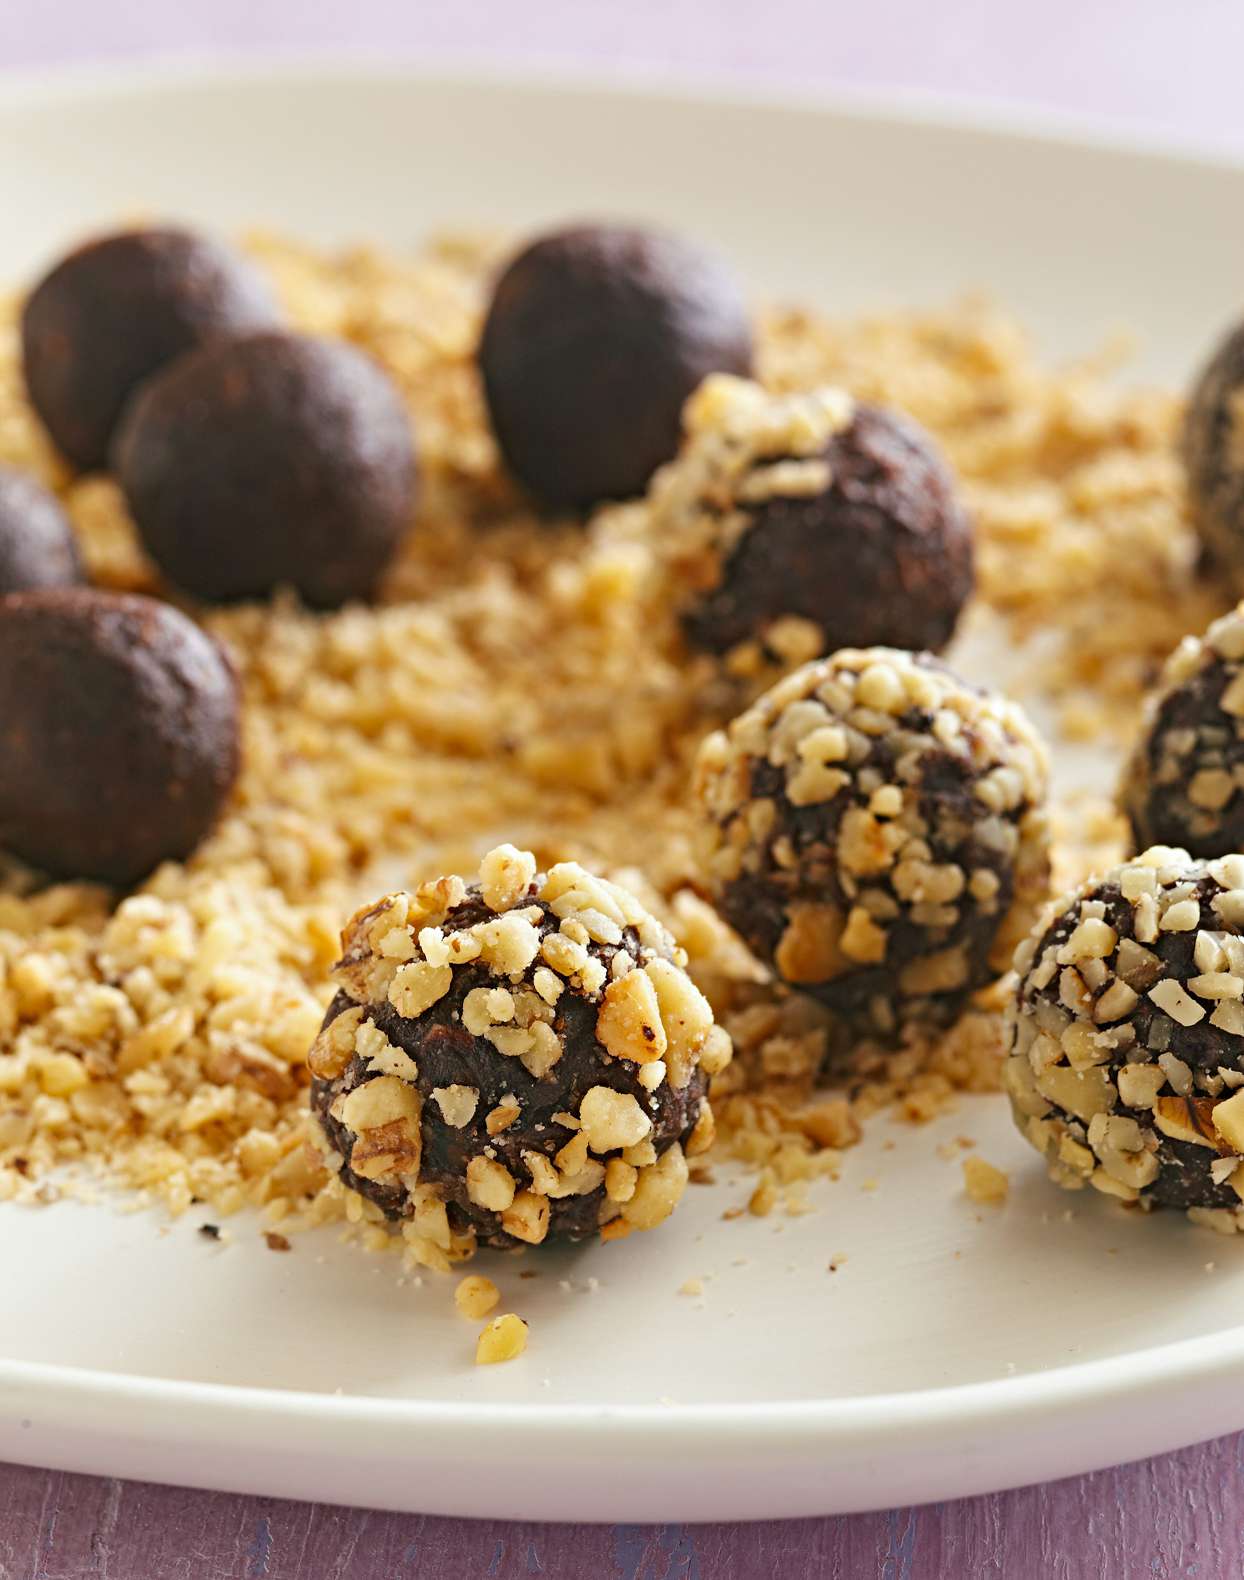 Chocolate-Date Truffles With Walnuts 